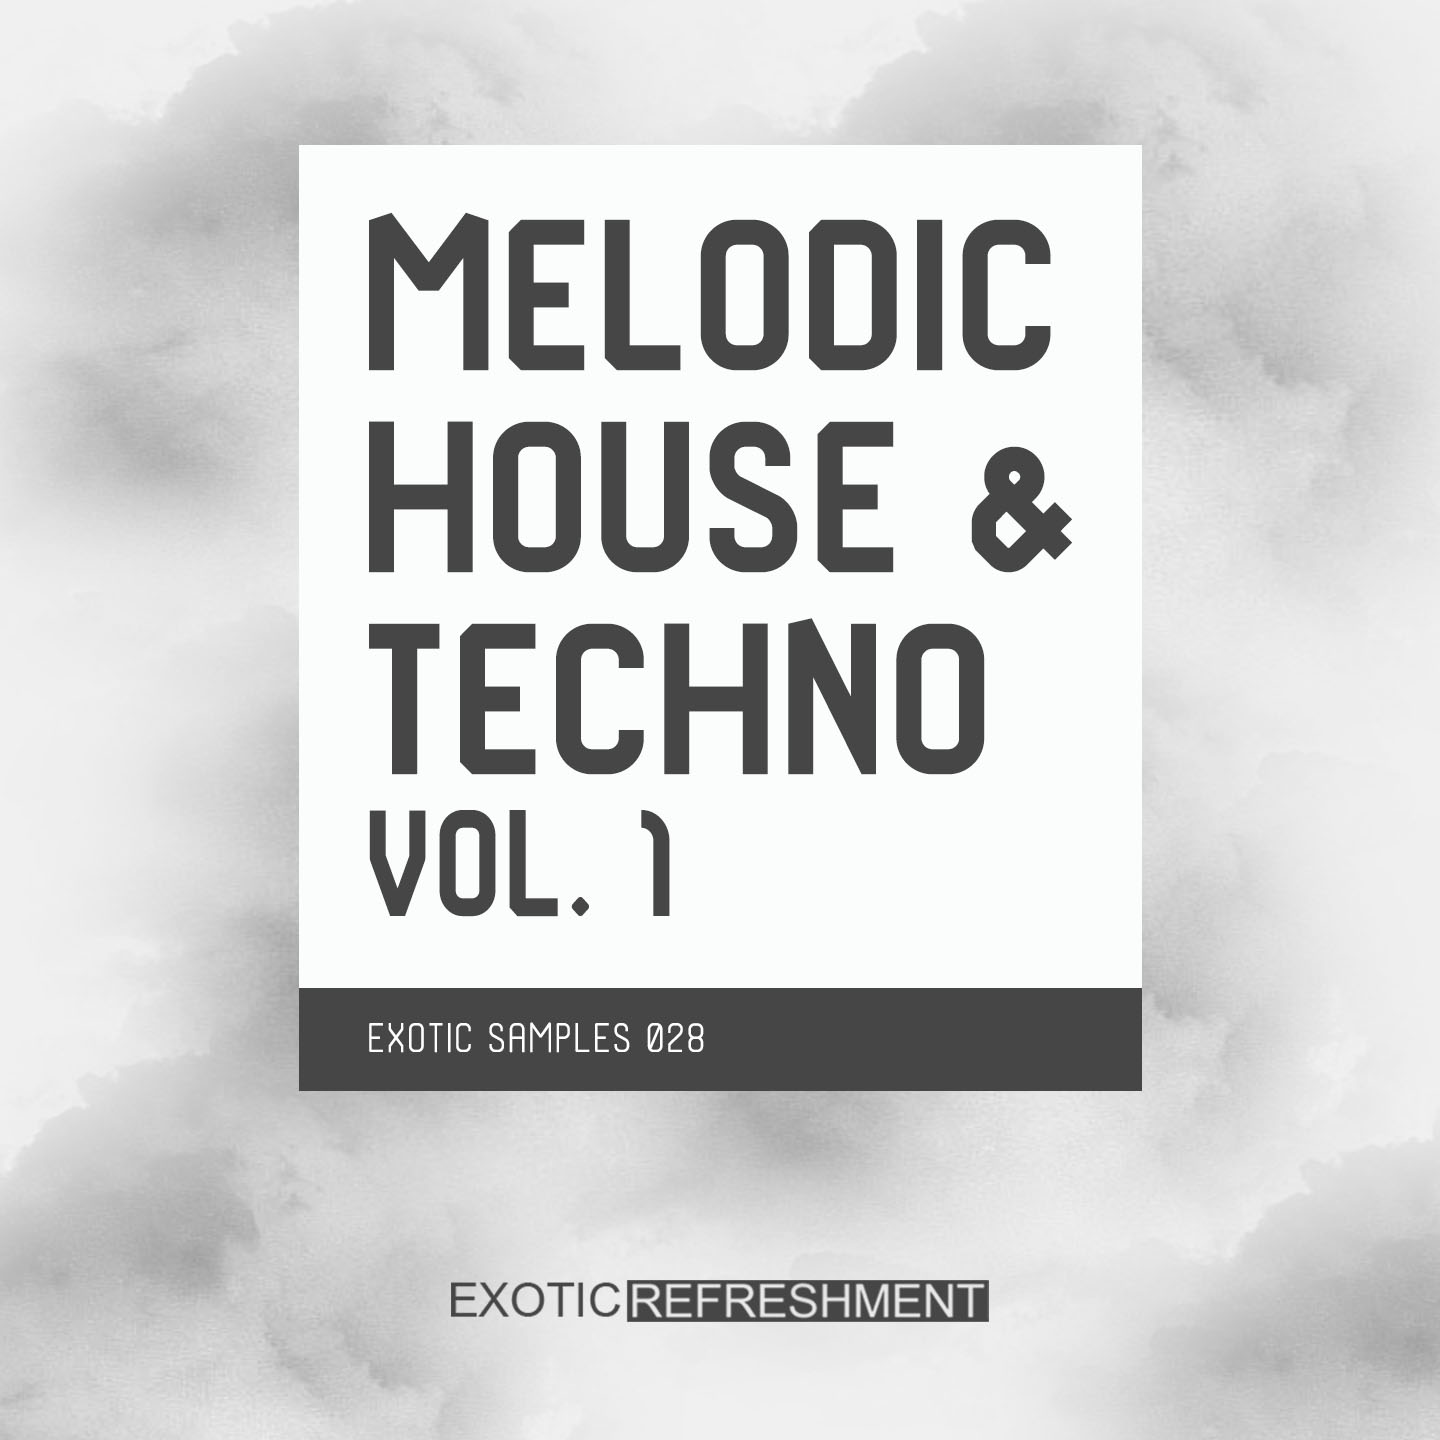 Melodic House & Techno vol. 1